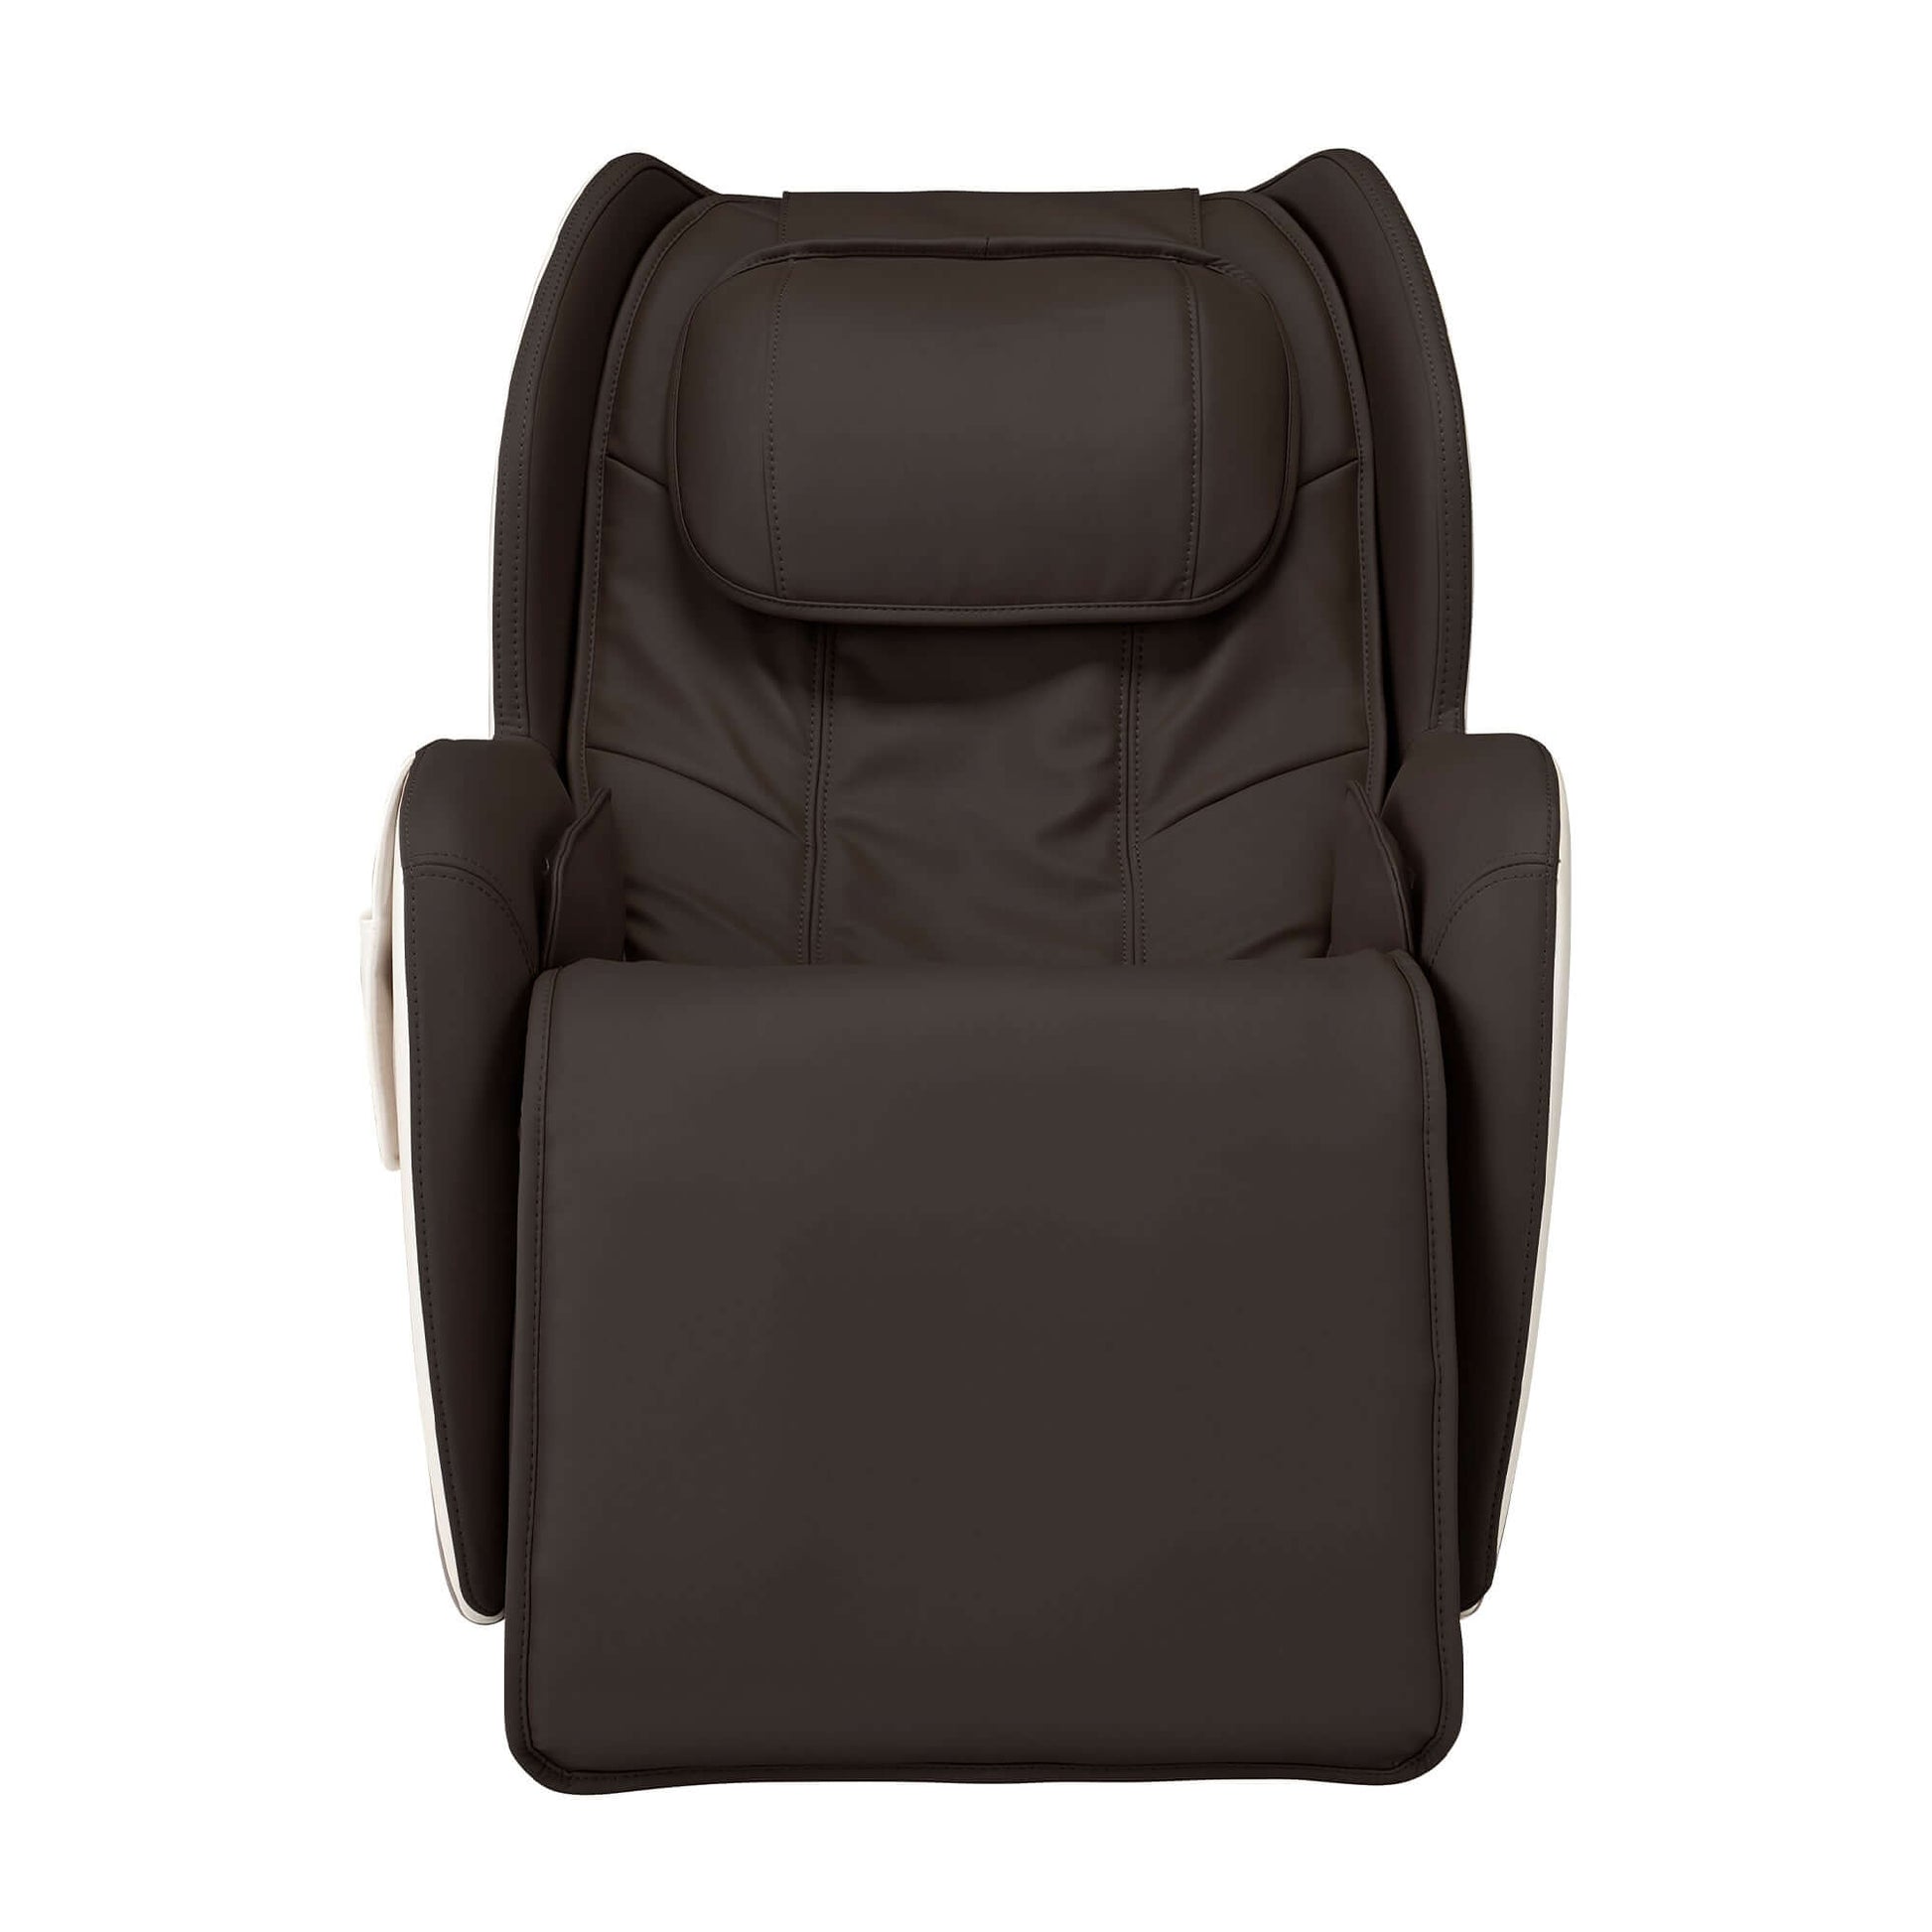 Synca Wellness CirC+ Zero Gravity SL Track Heated Massage Chair - Electric Massaging Chairs